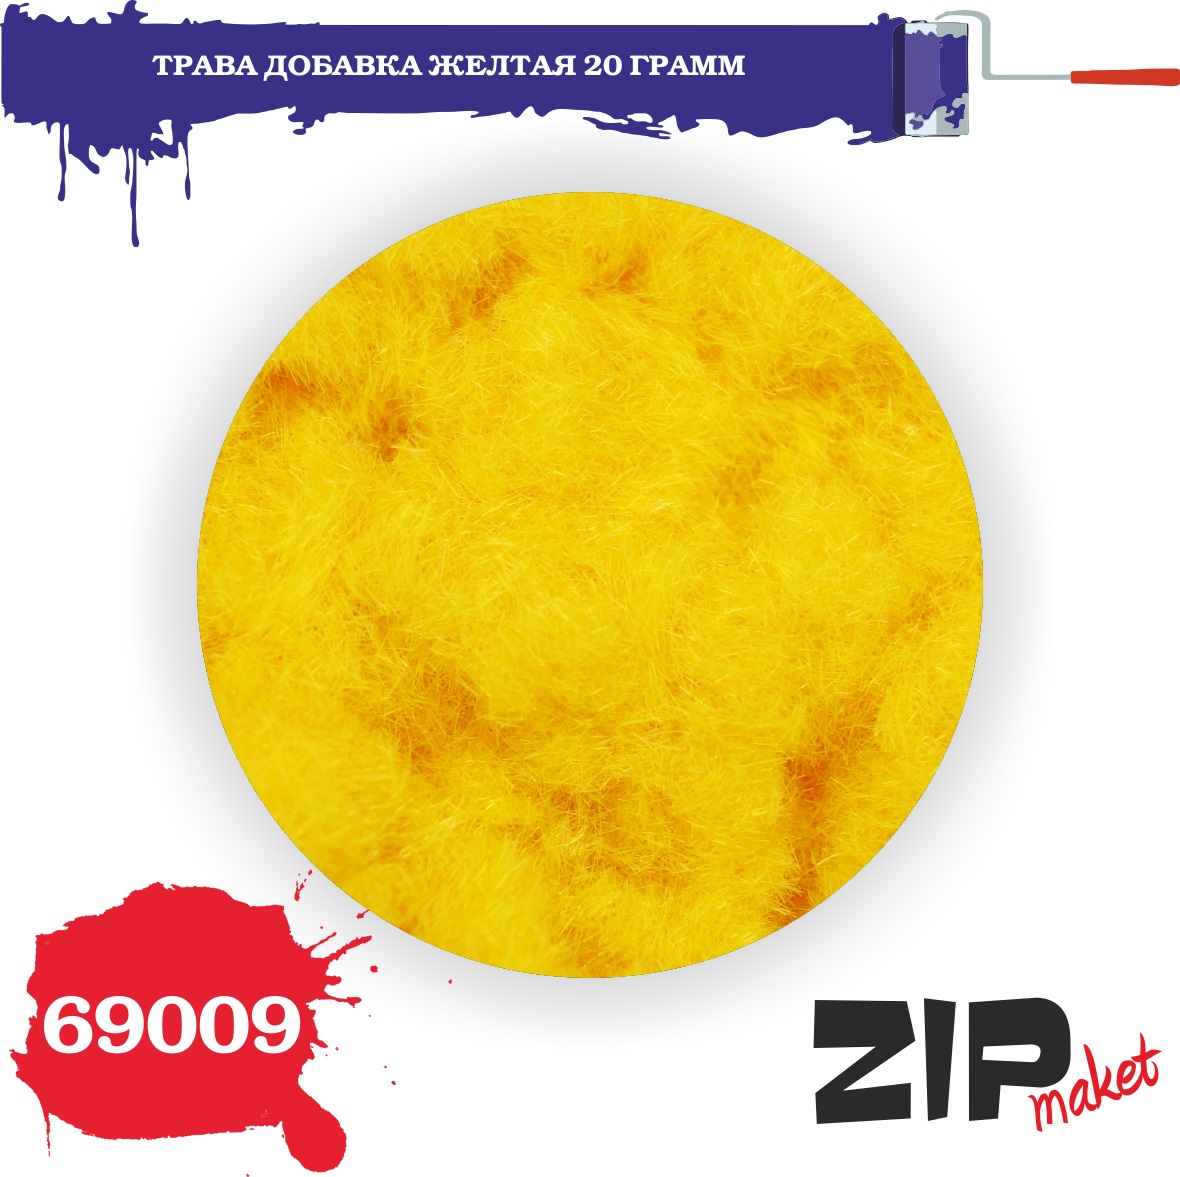 69009  материалы для диорам  Трава добавка желтая, 20гр